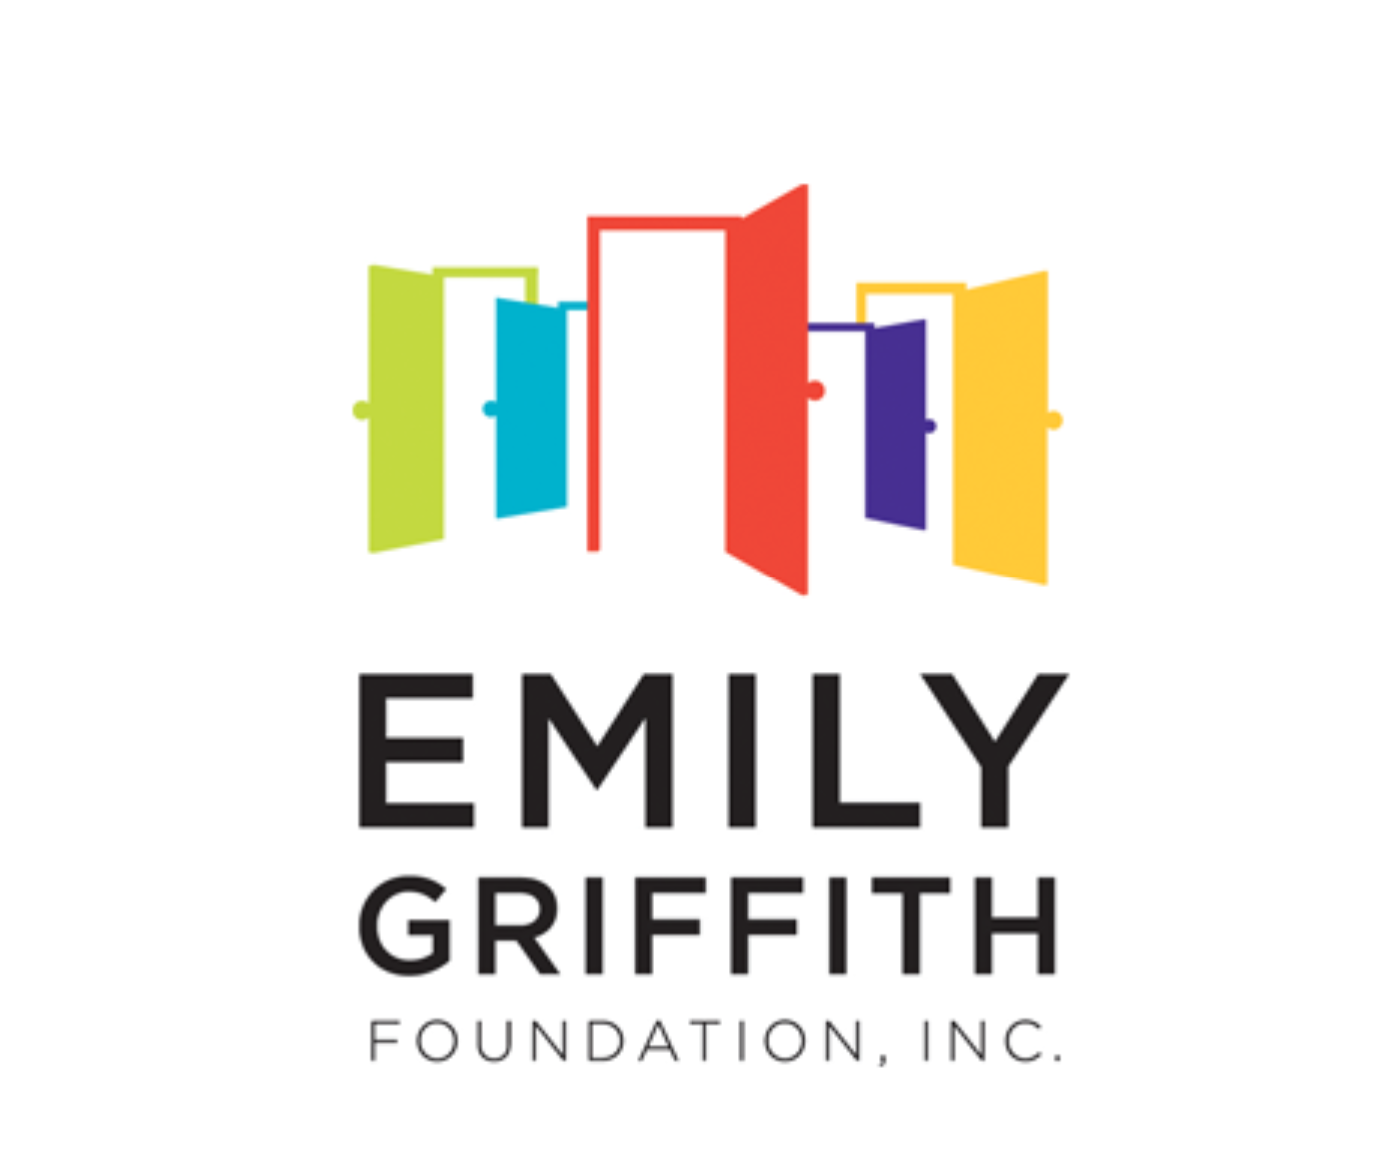 Emily Griffith Foundation